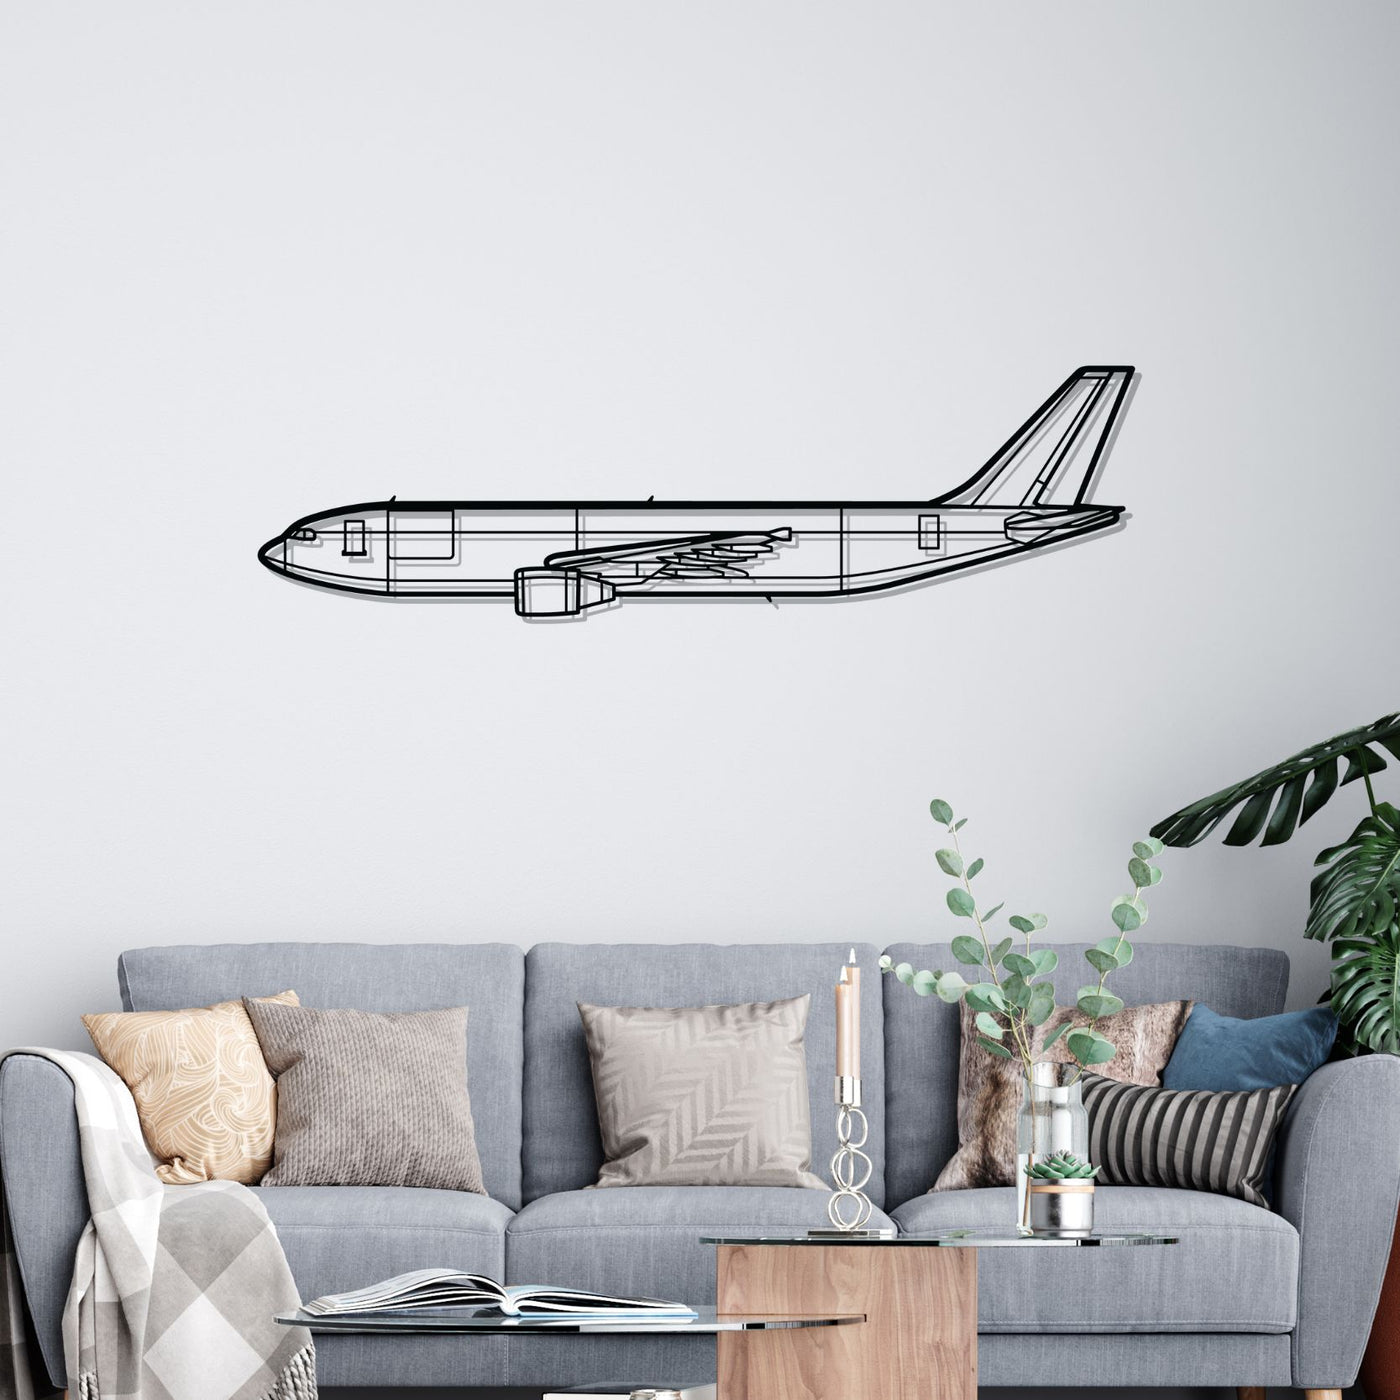 A300-600F Silhouette Metal Wall Art